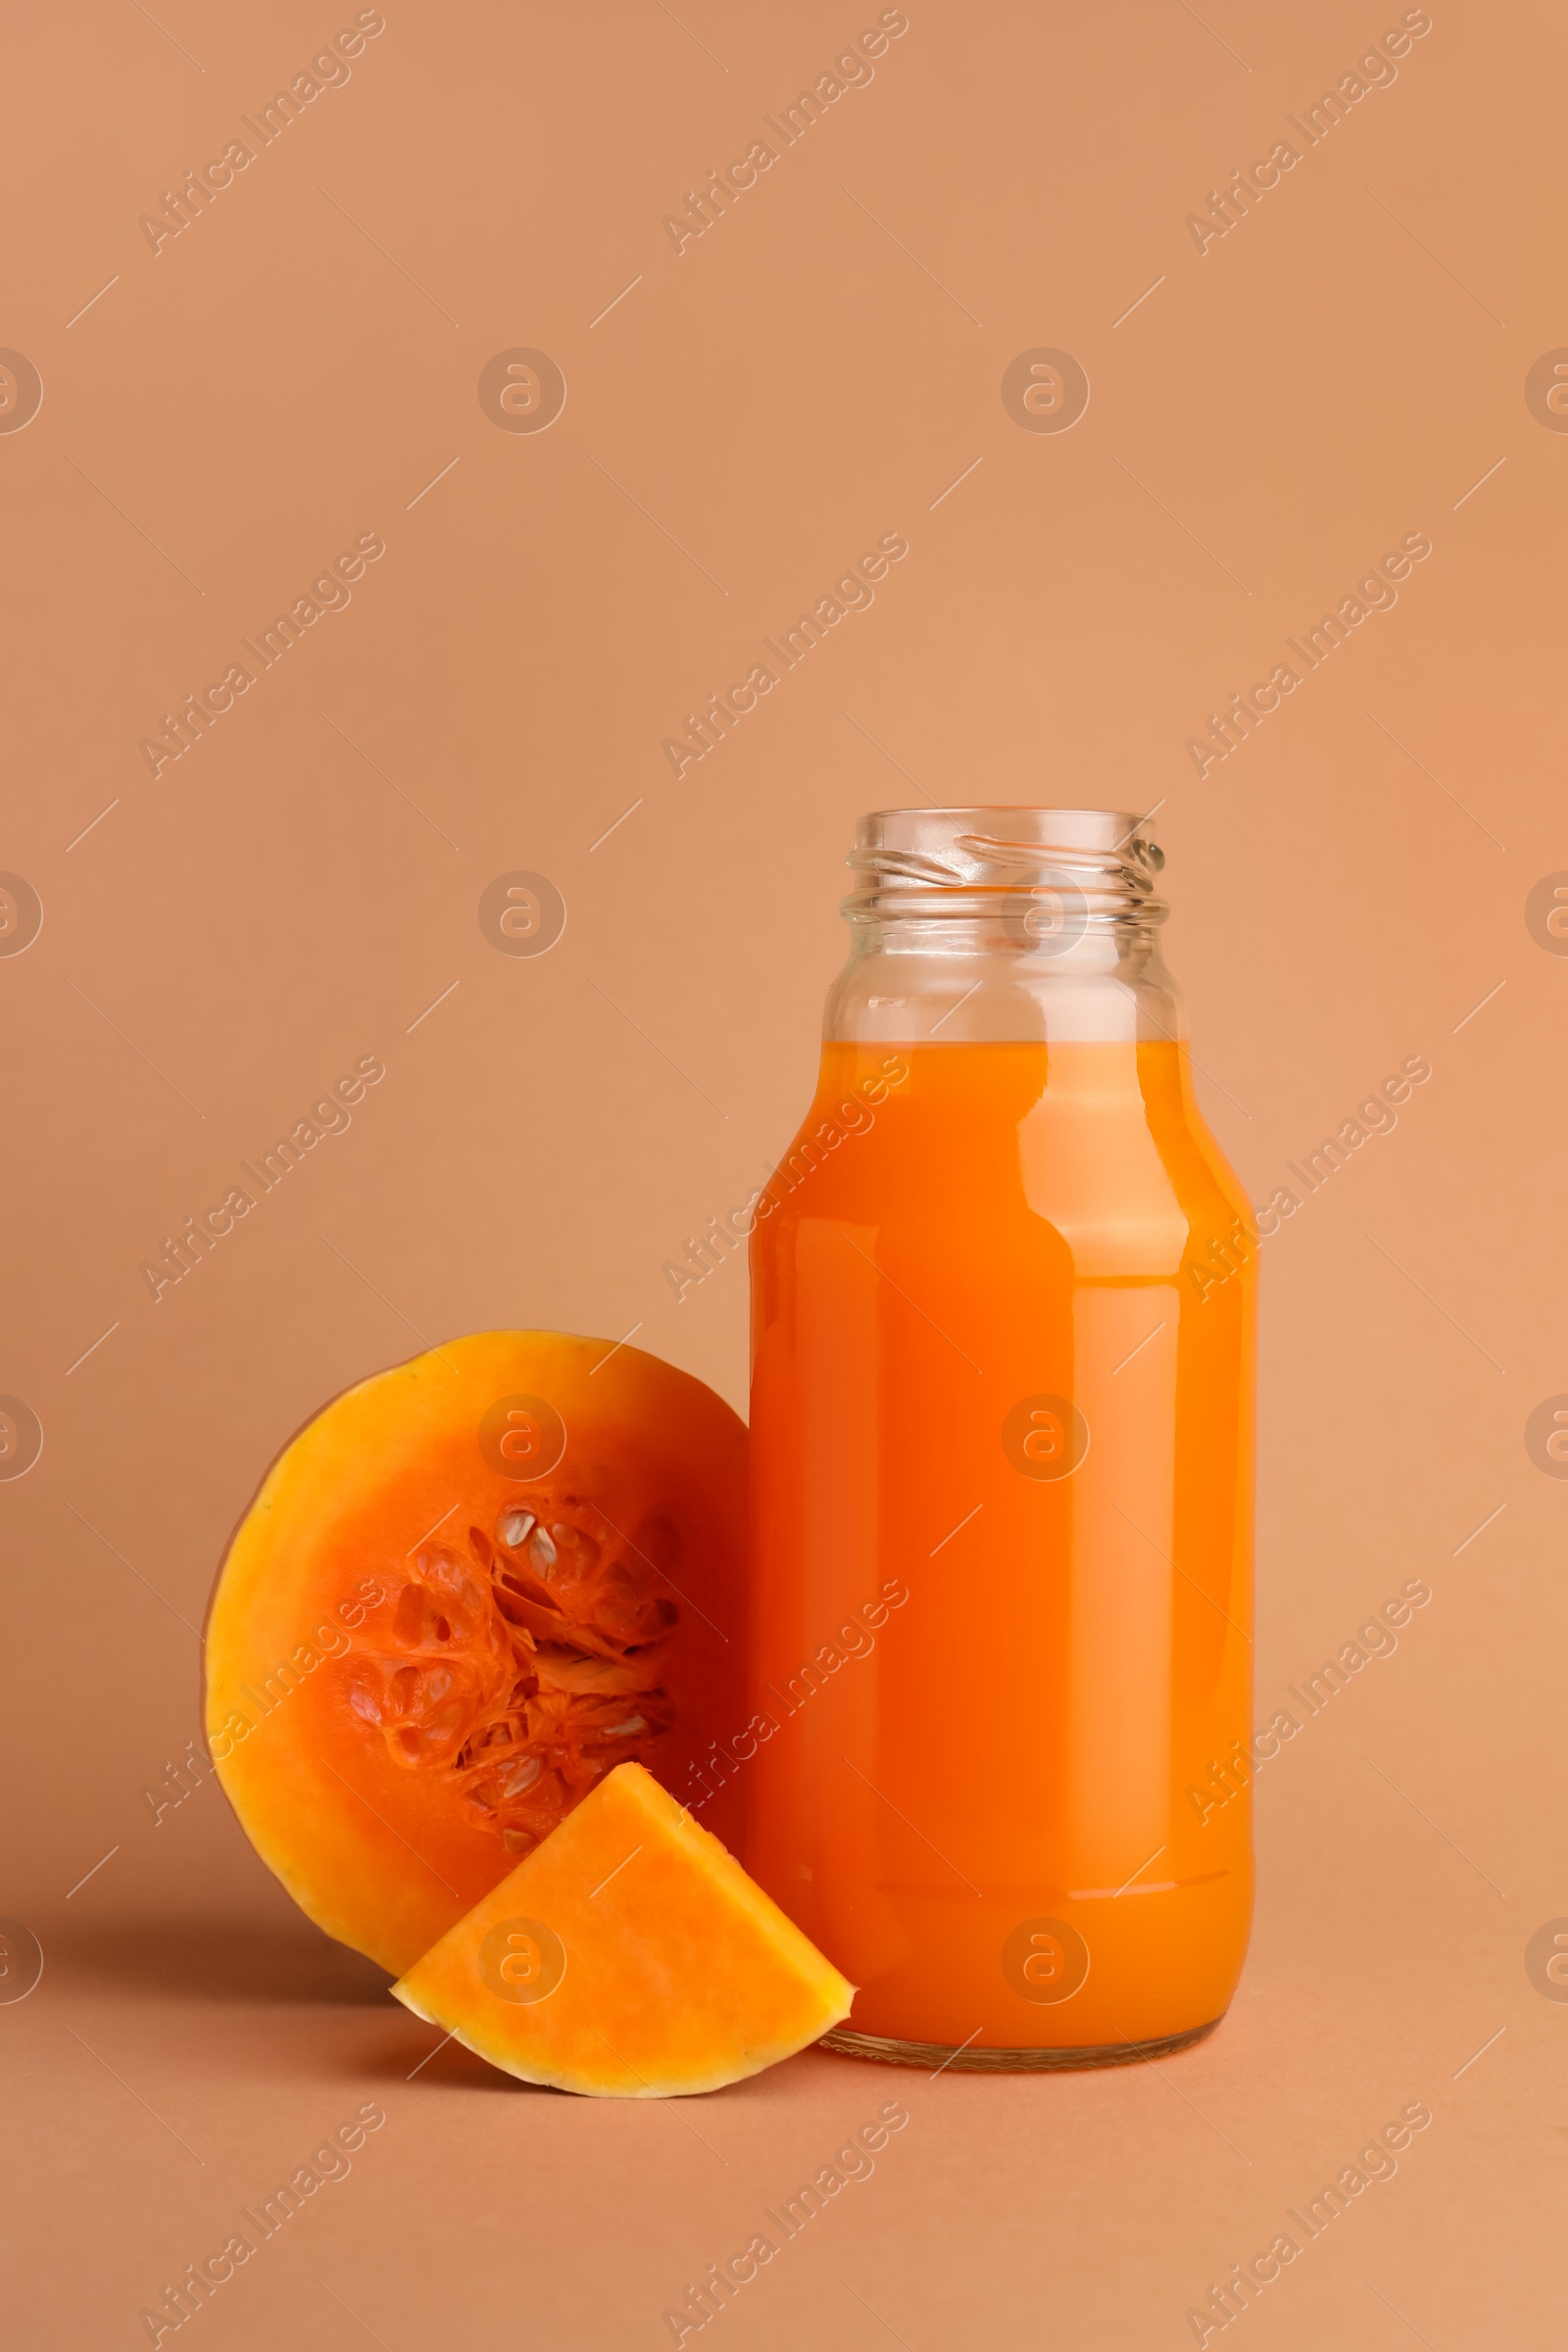 Photo of Tasty pumpkin juice in glass bottle and cut pumpkin on pale orange background